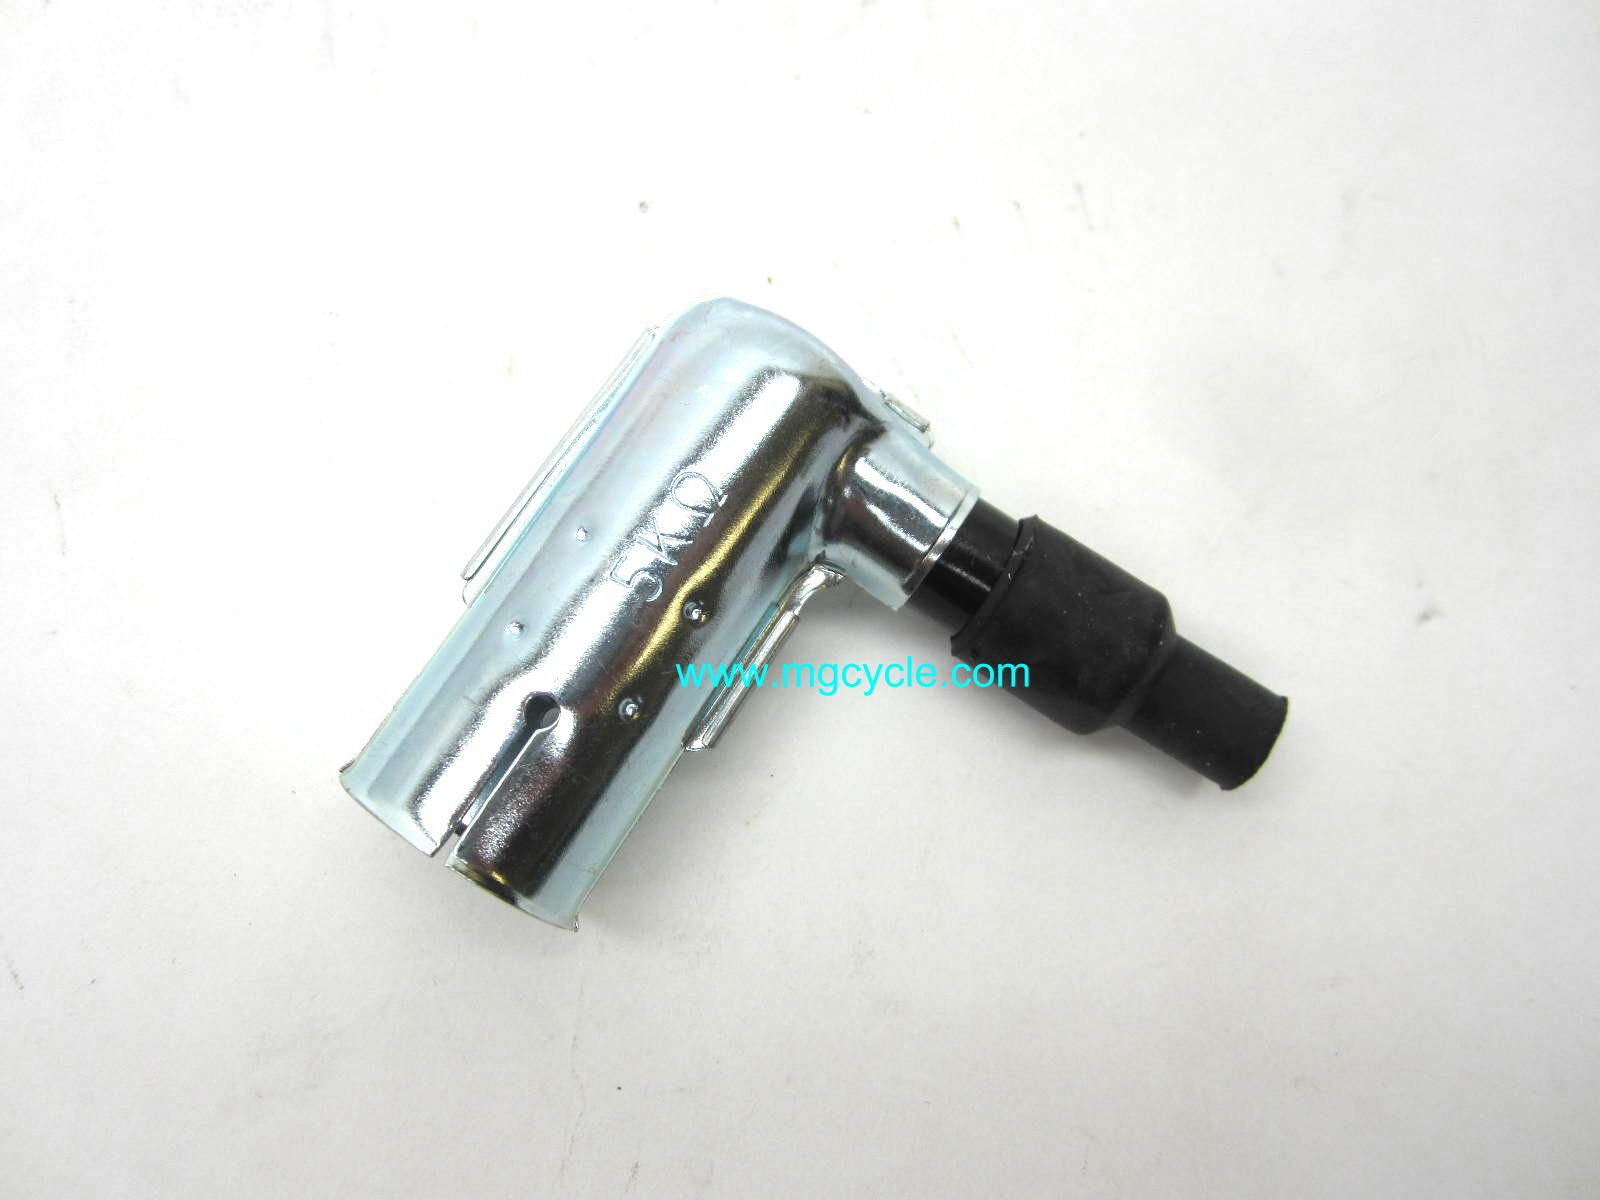 Bosch type metal shielded spark plug cap, 5k ohm - Click Image to Close